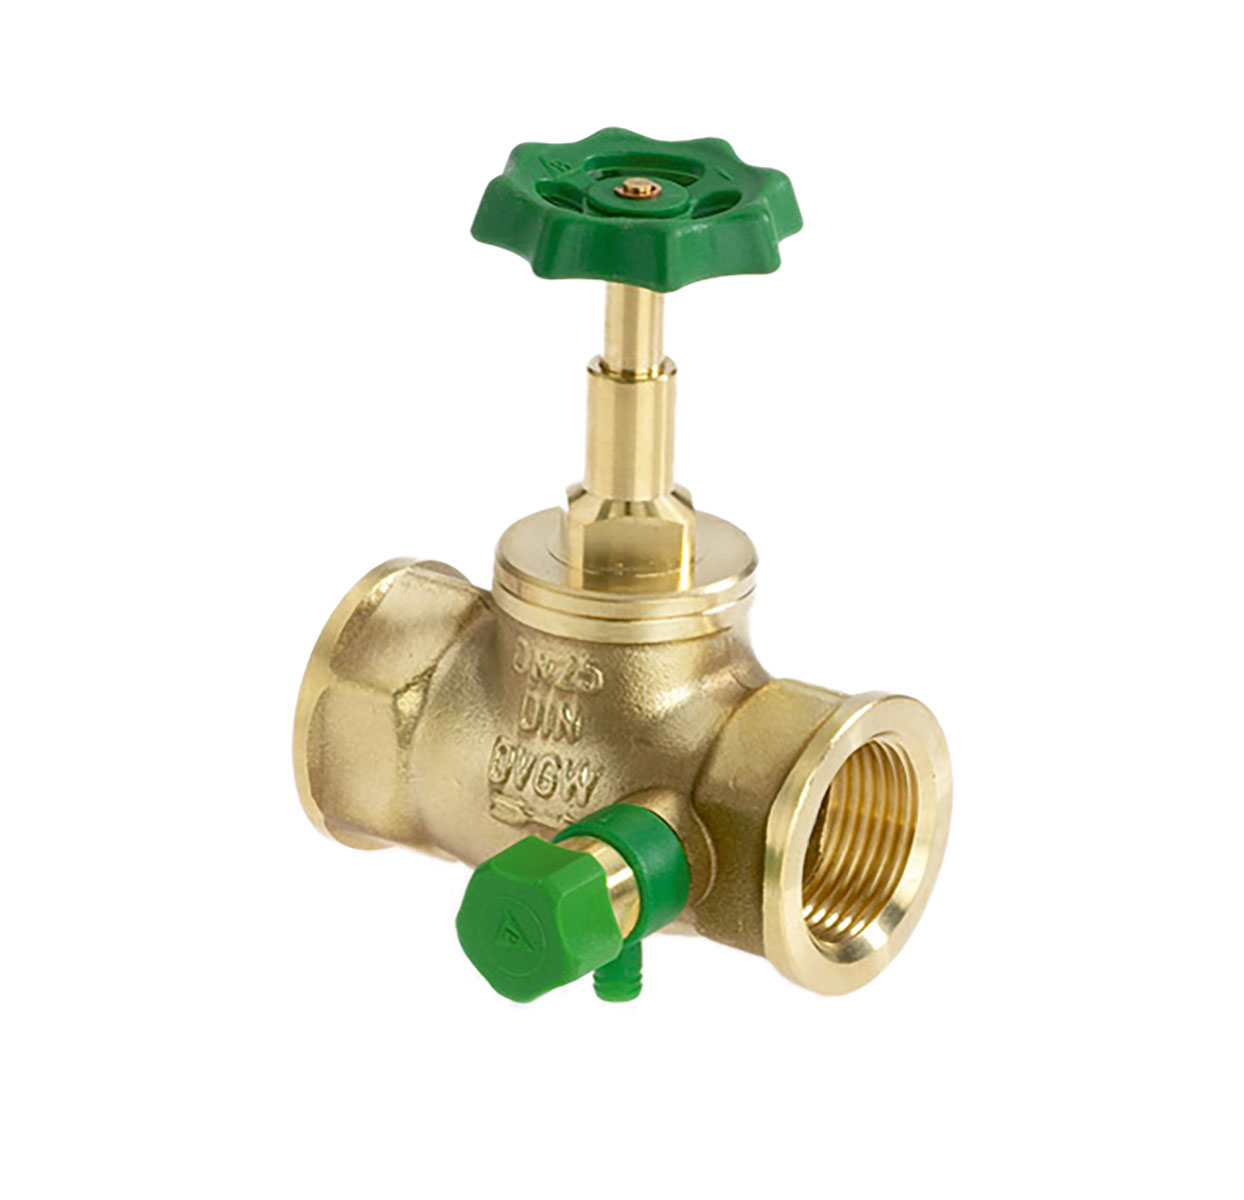 1304250 - CR-Brass Globe valve with drain valve, rising